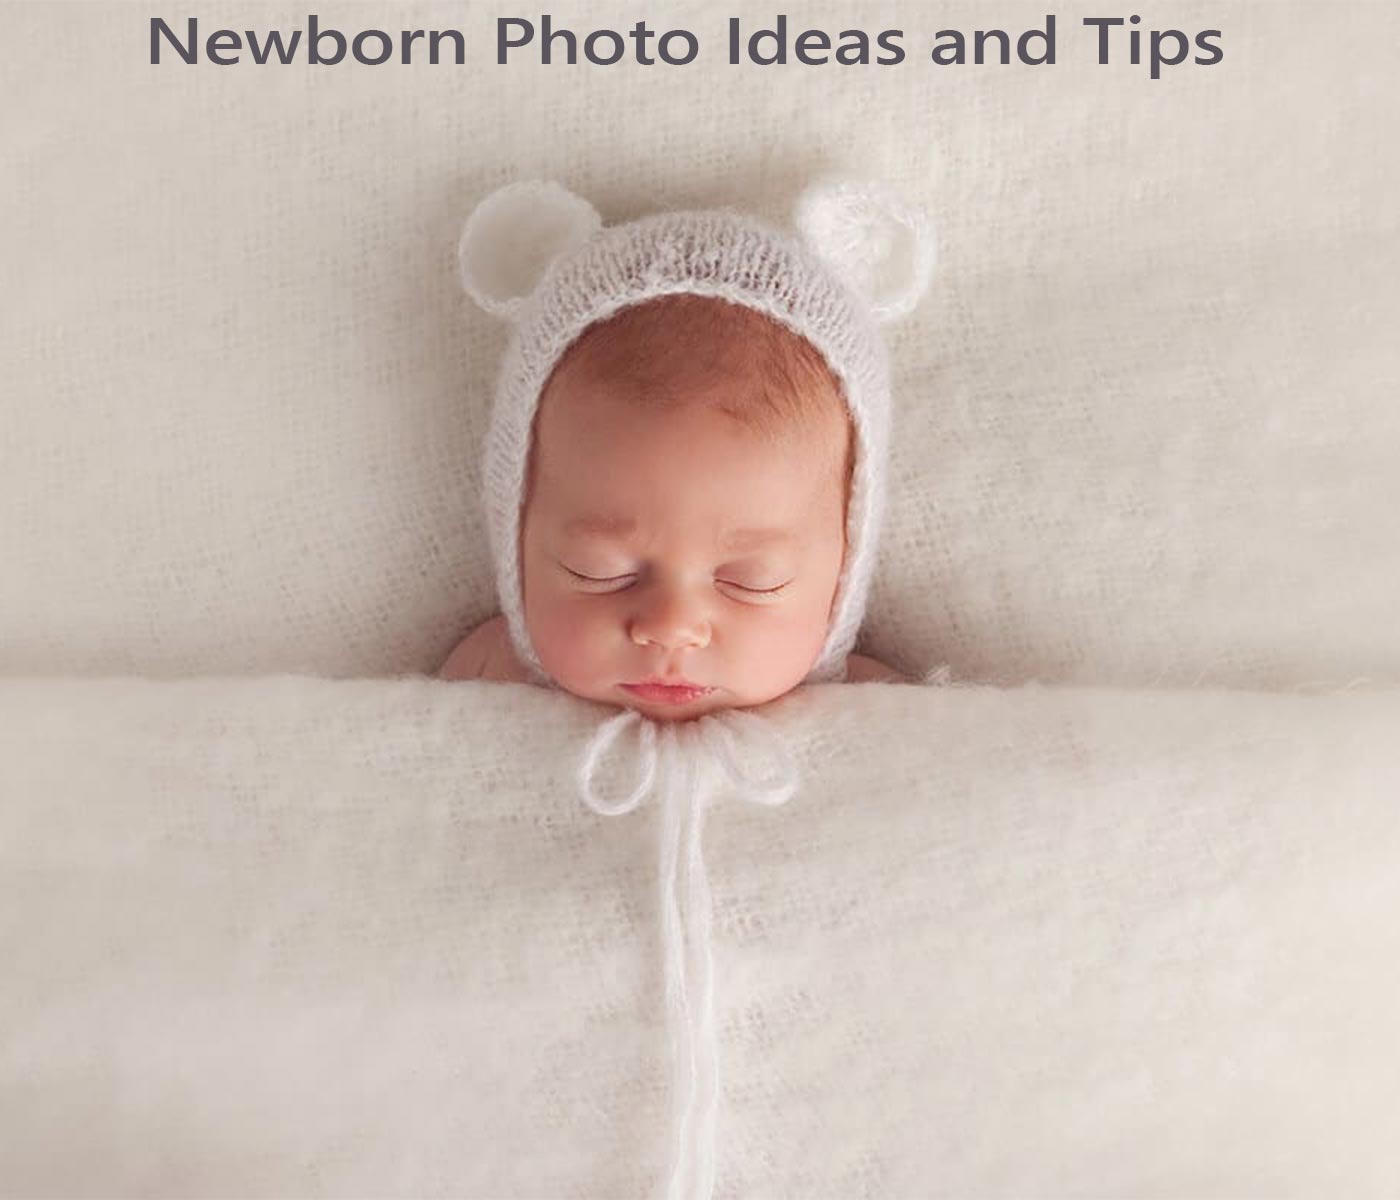 Newborn Photo Ideas and Tips